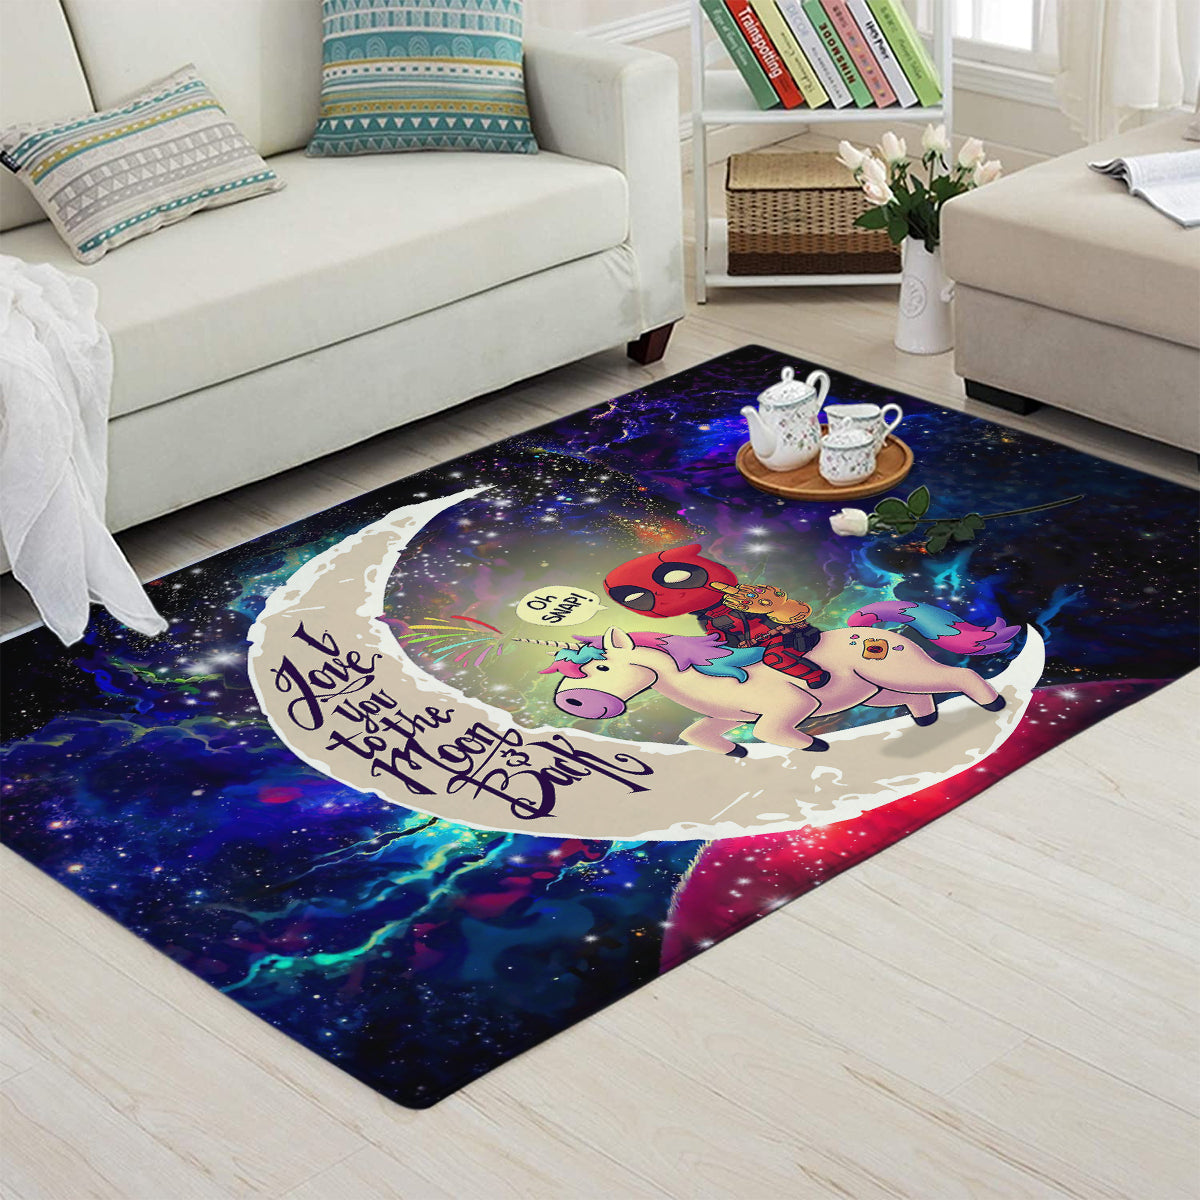 Deadpool Unicorn Love You To The Moon Galaxy Carpet Rug Home Room Decor